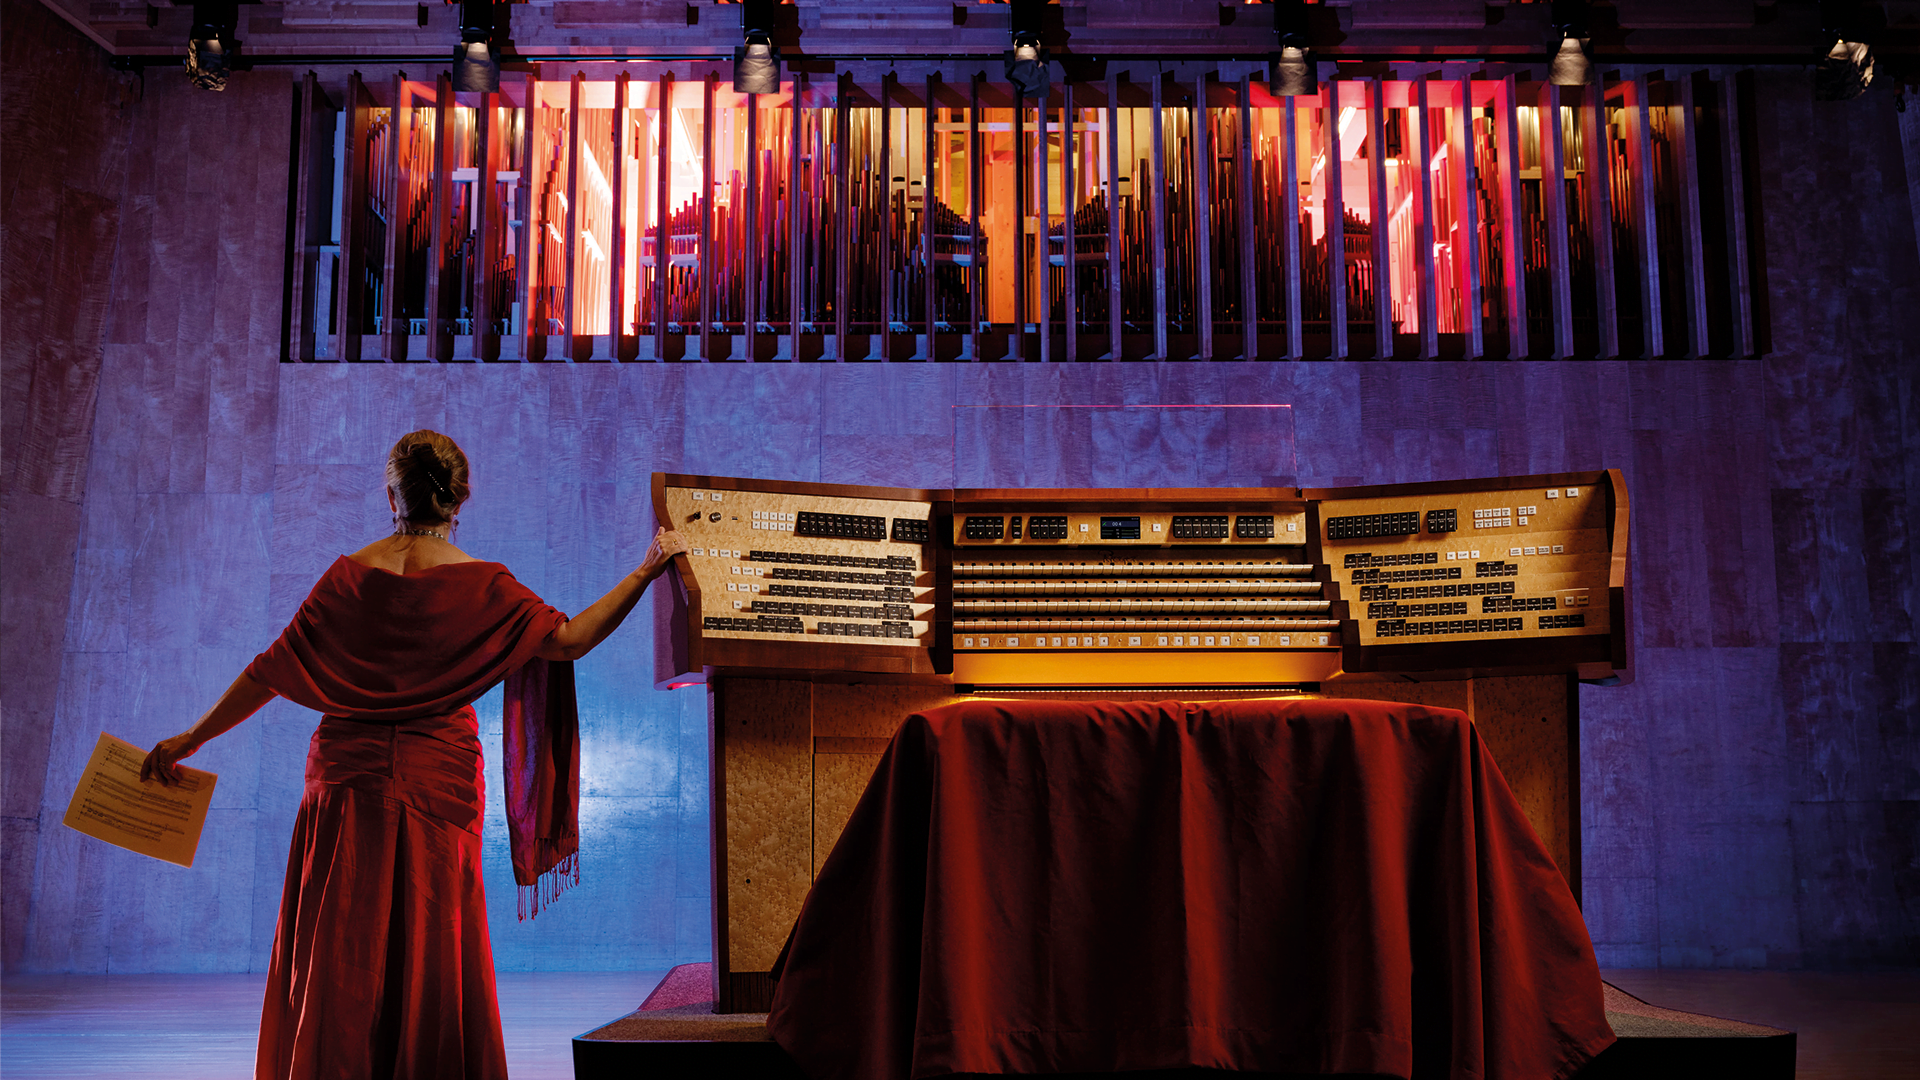 Konserthusets orgel har 9000 orgelpipor.